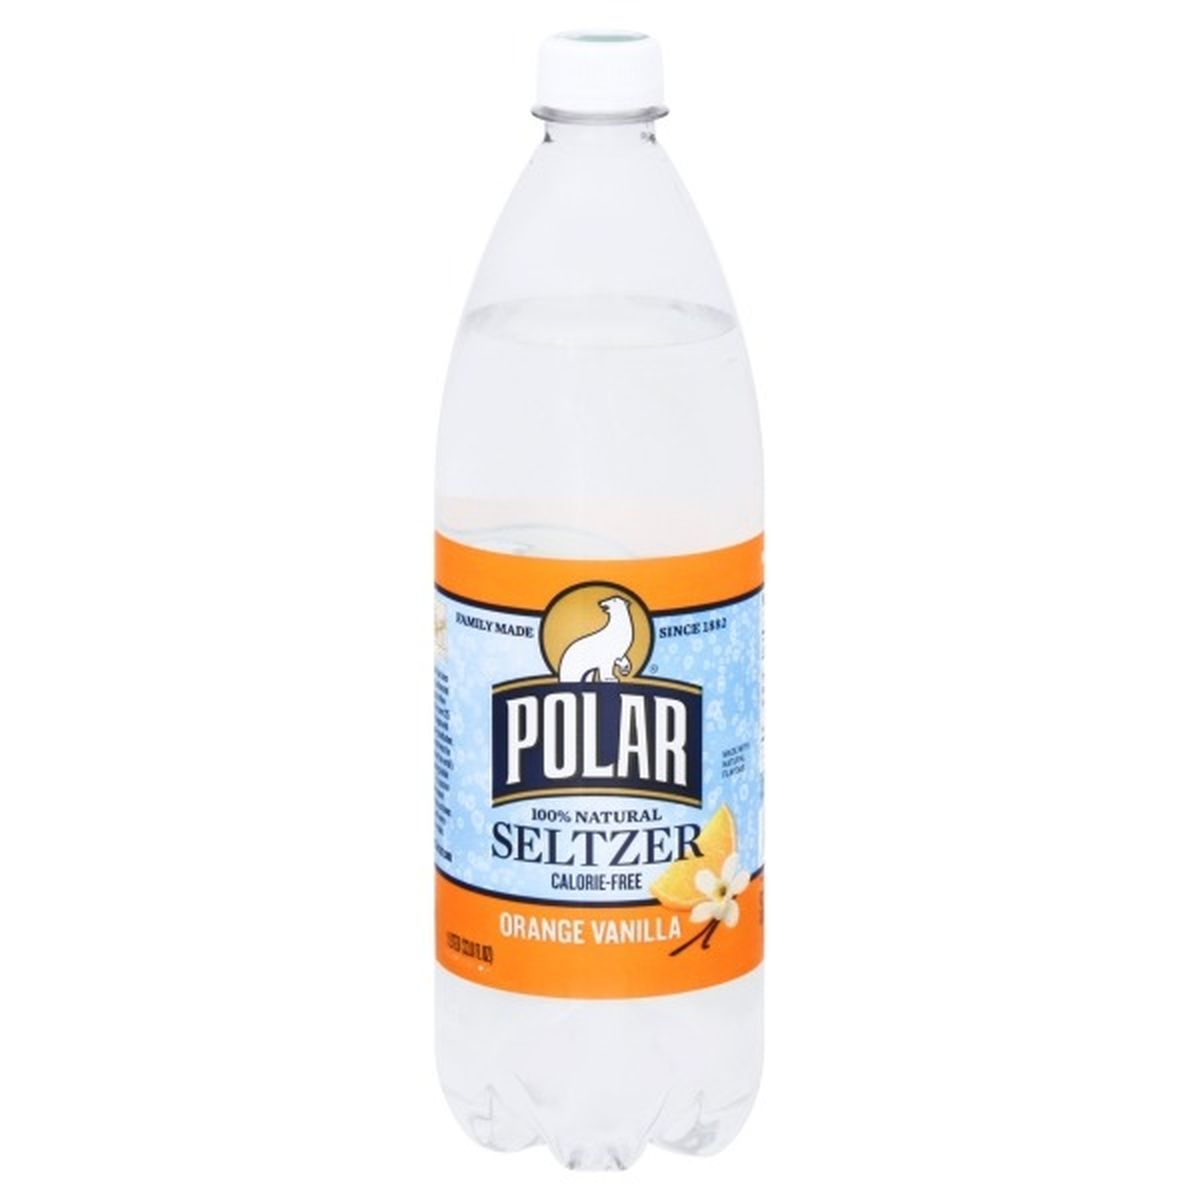 Calories in Polar Seltzer, Orange Vanilla